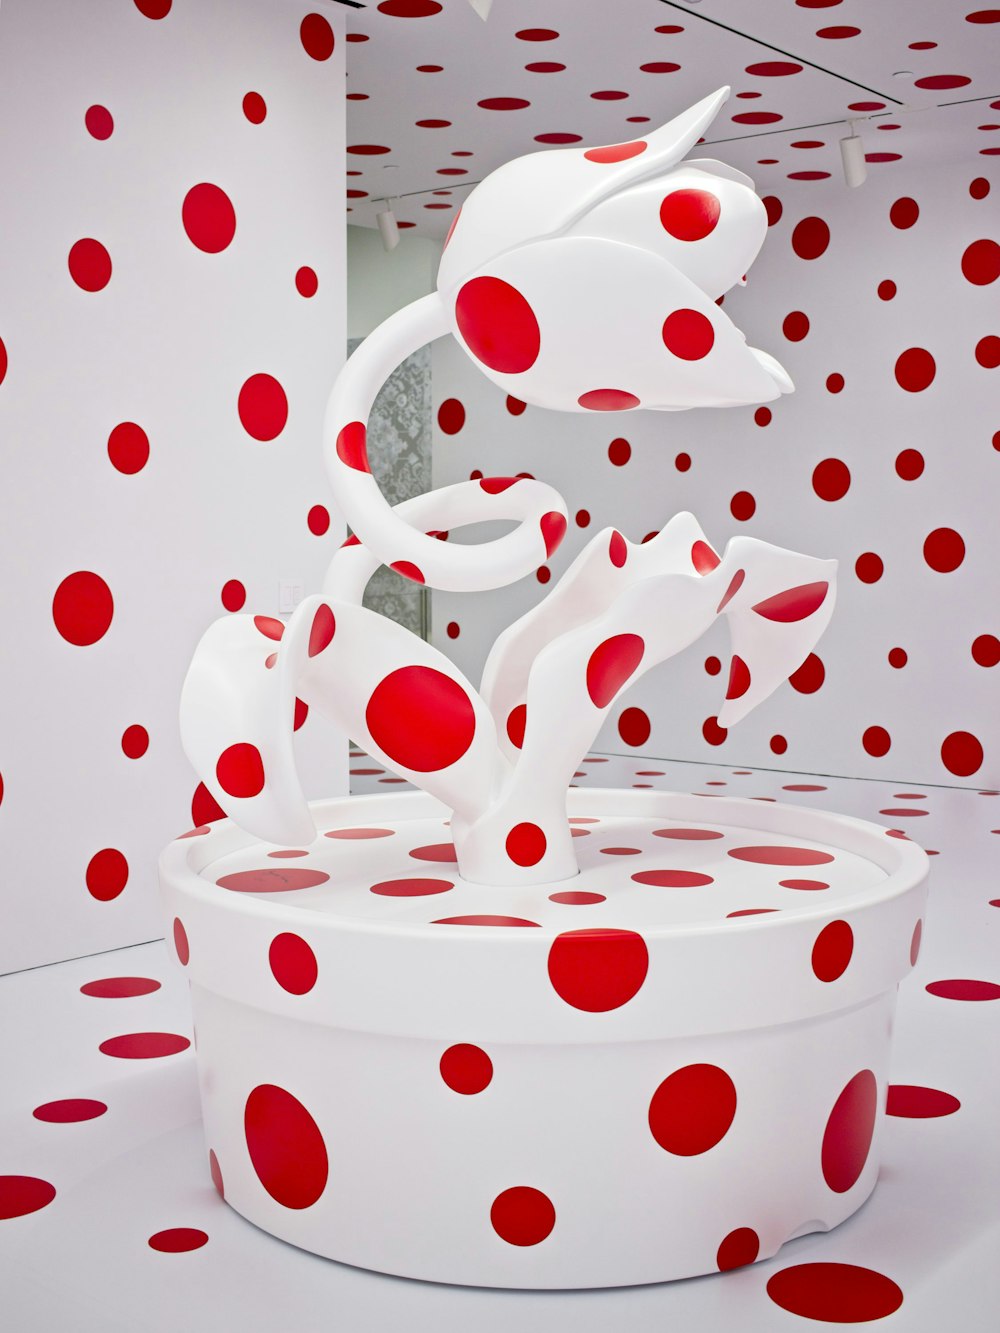 en milliard studie I fare Red Dot Pictures | Download Free Images on Unsplash